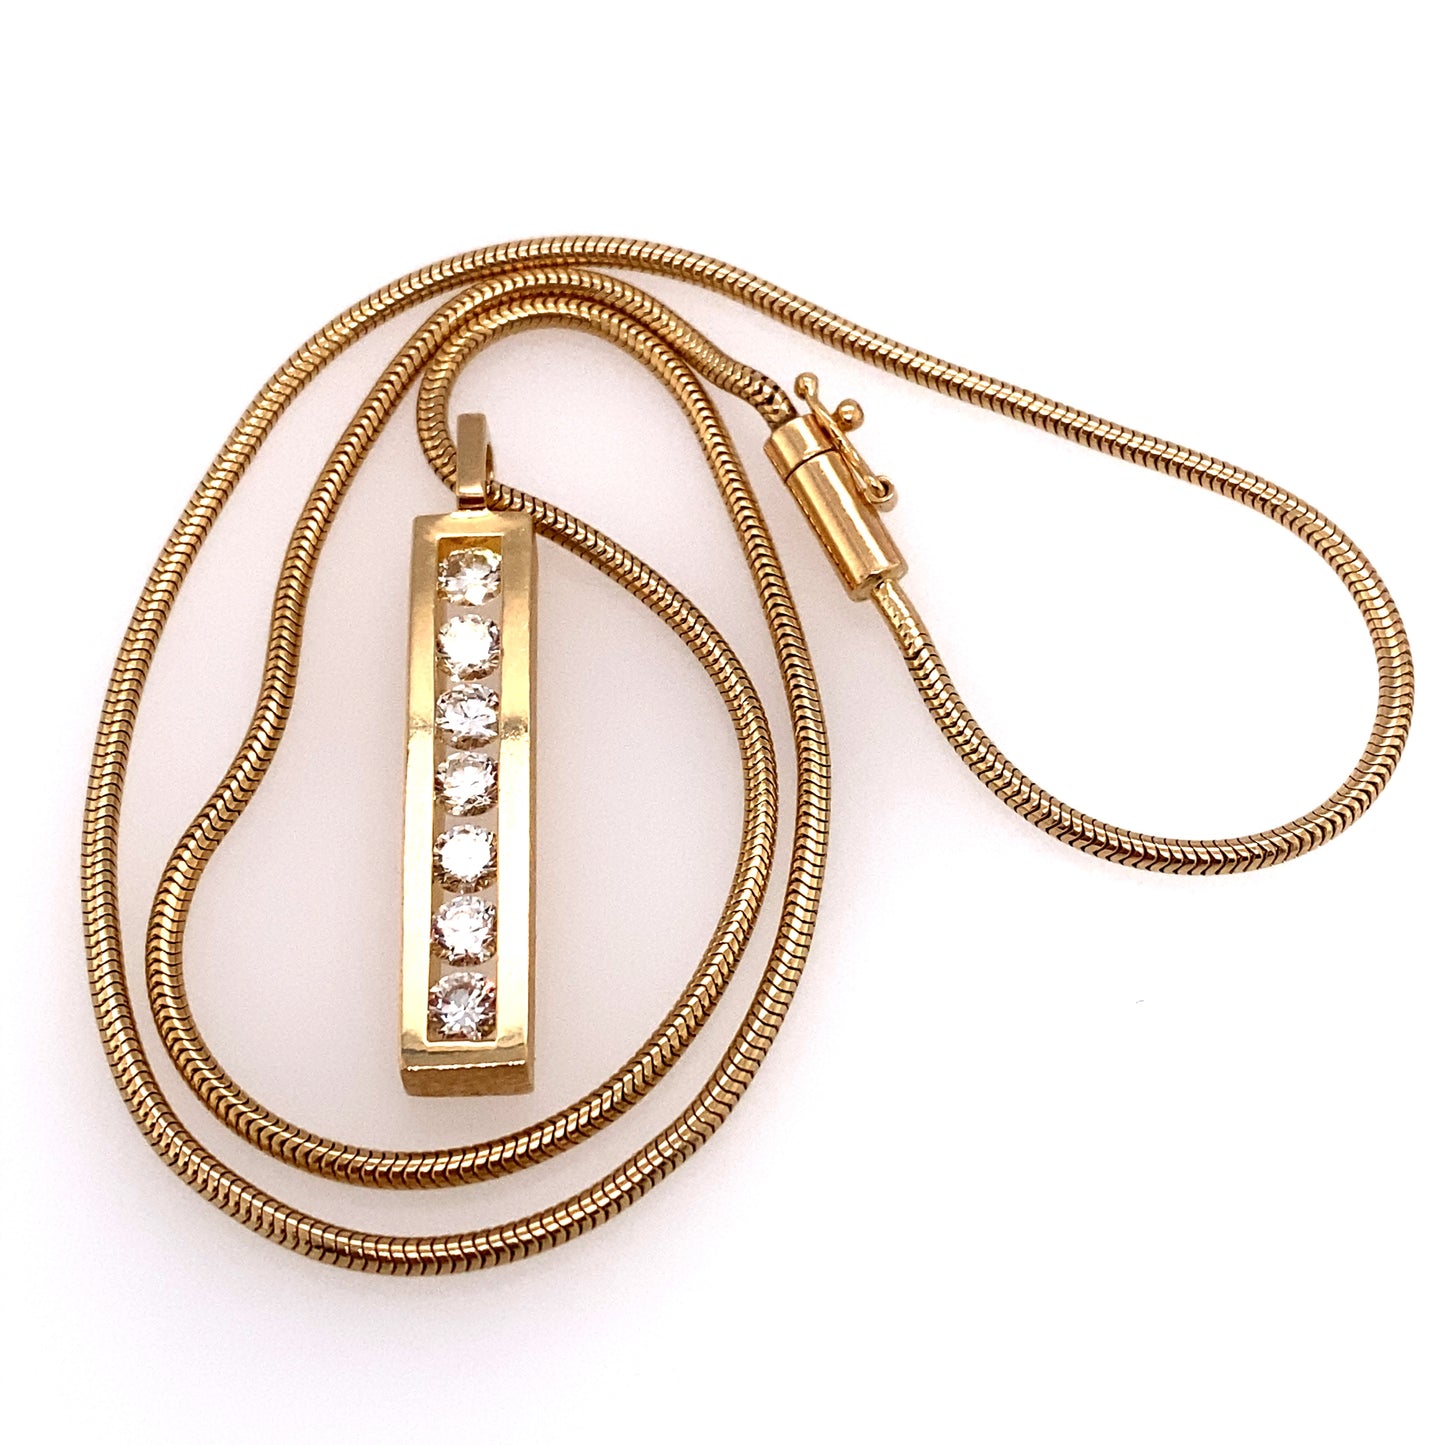 Circa 1960 1.75 Carat Diamond Bar Pendant and Chain in 14 Karat Gold